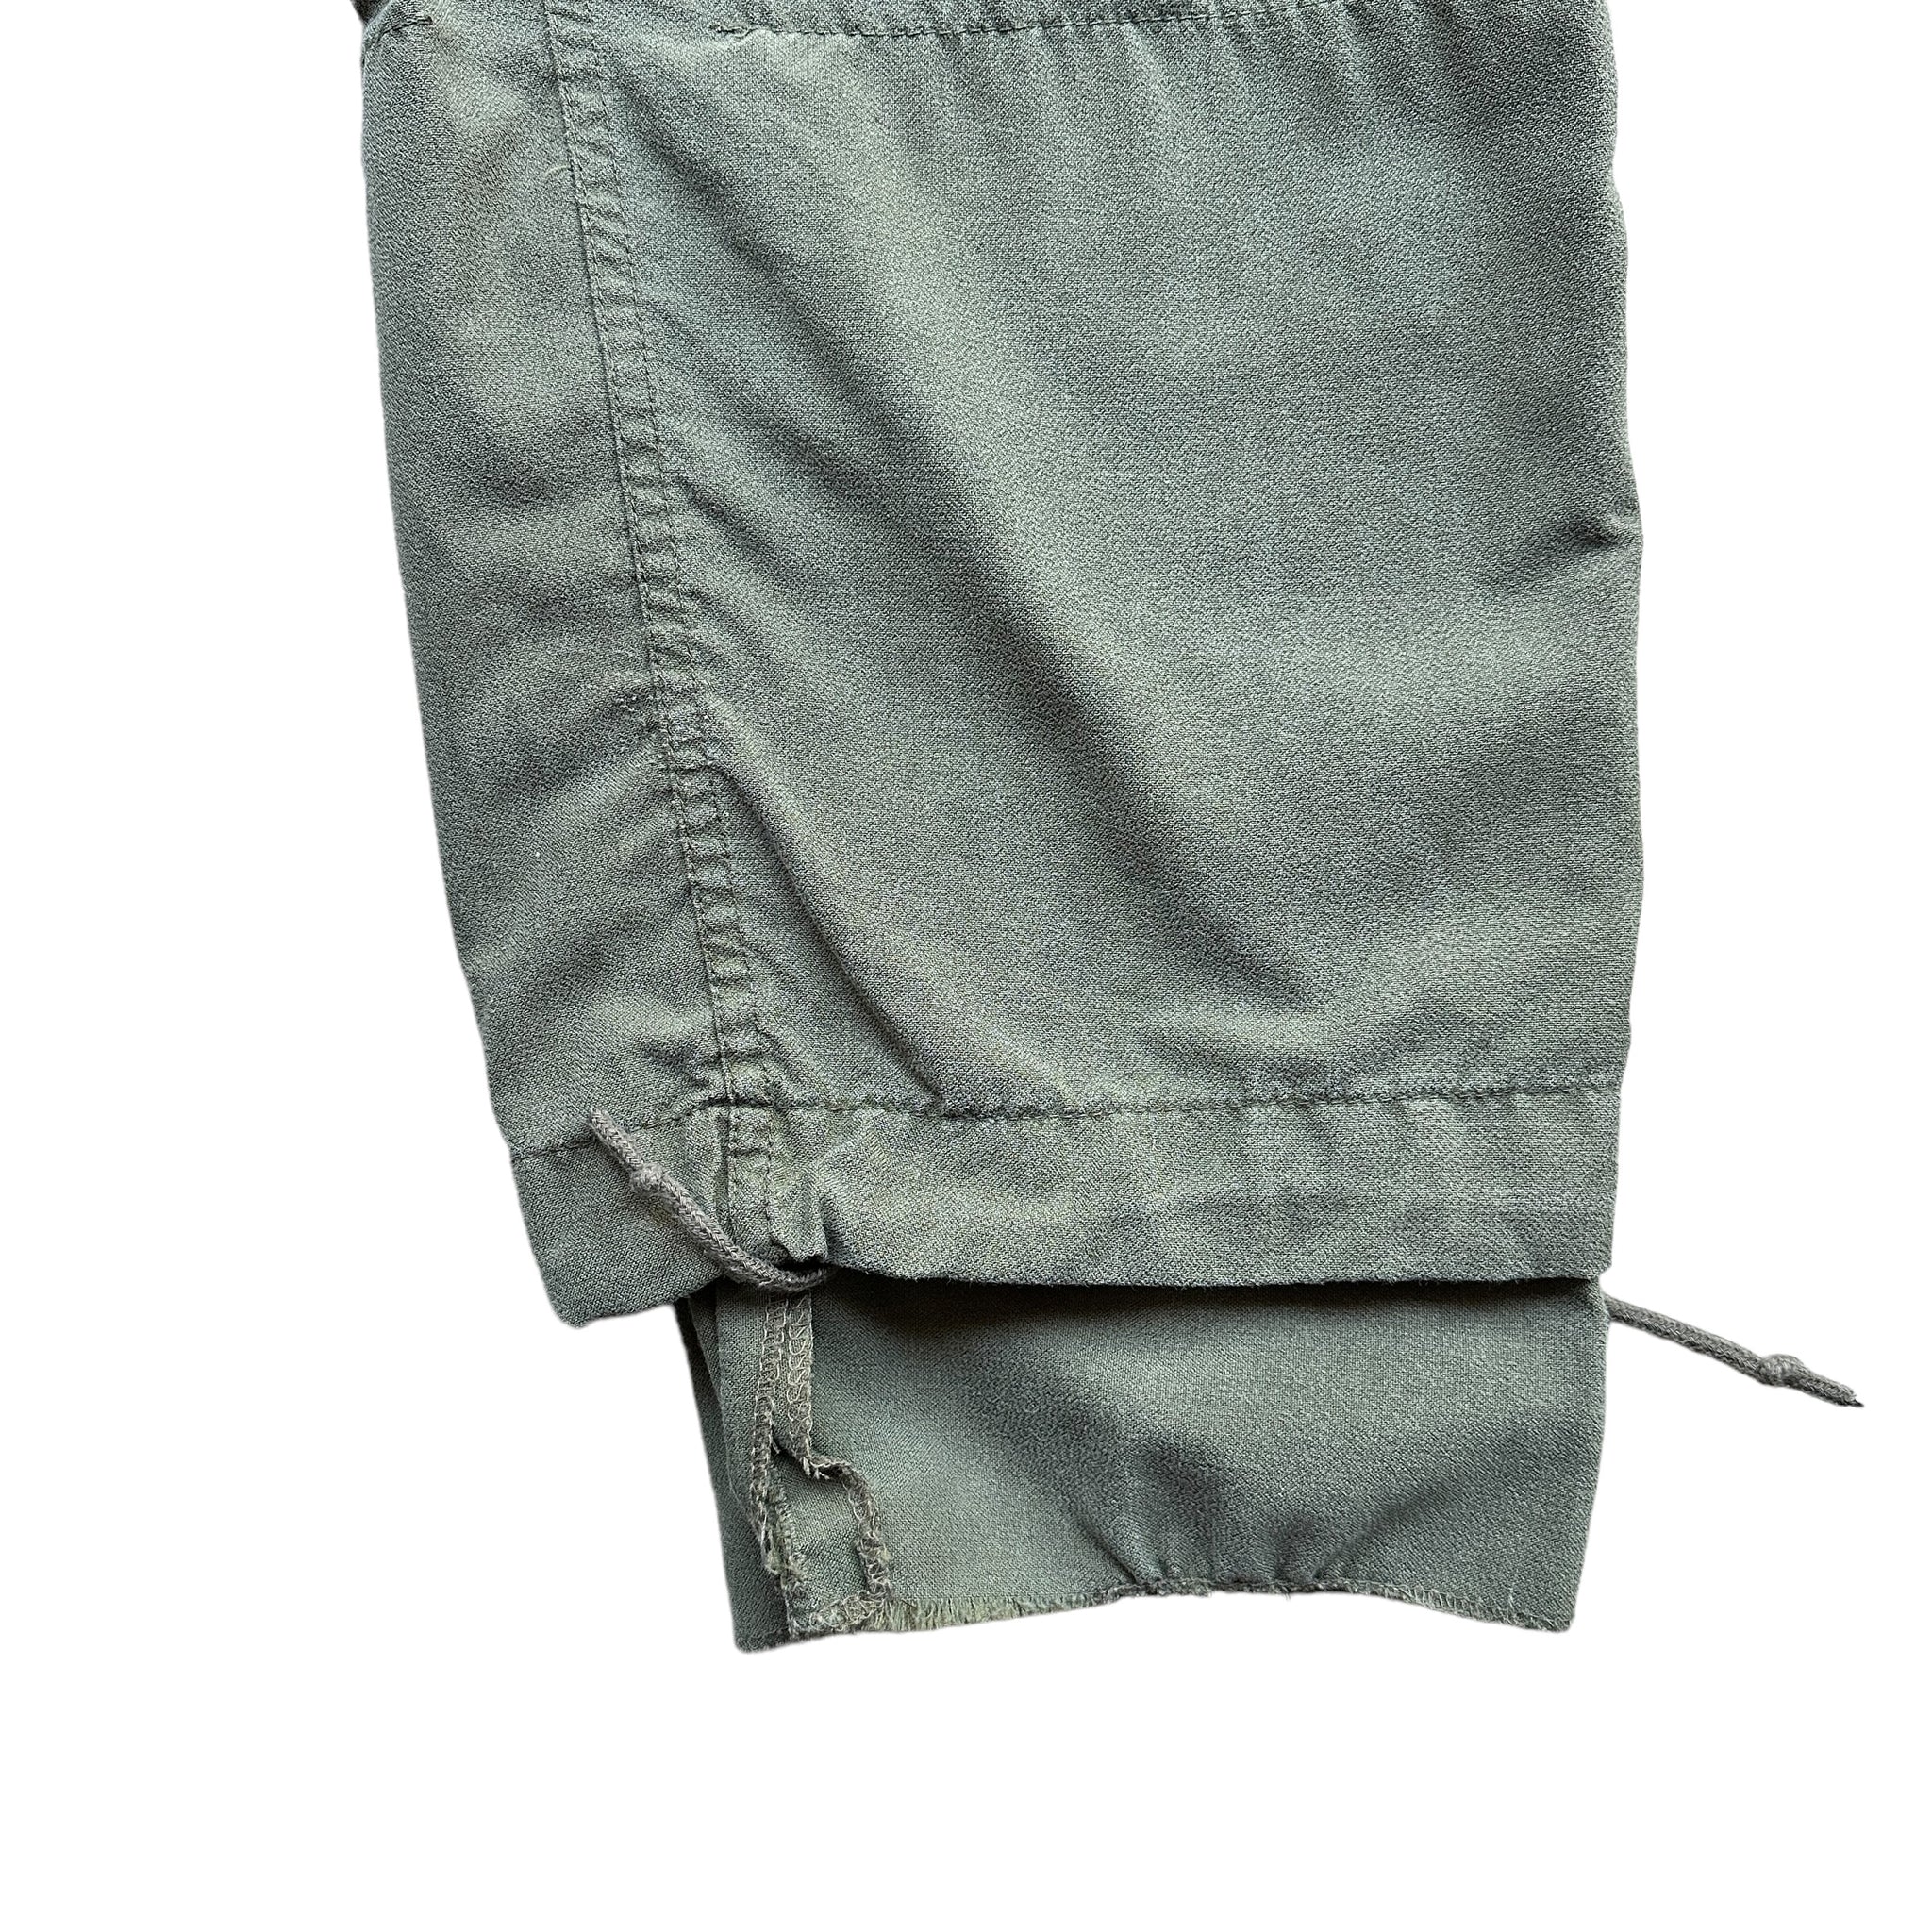 80s Combat trousers cargo pant 34/28